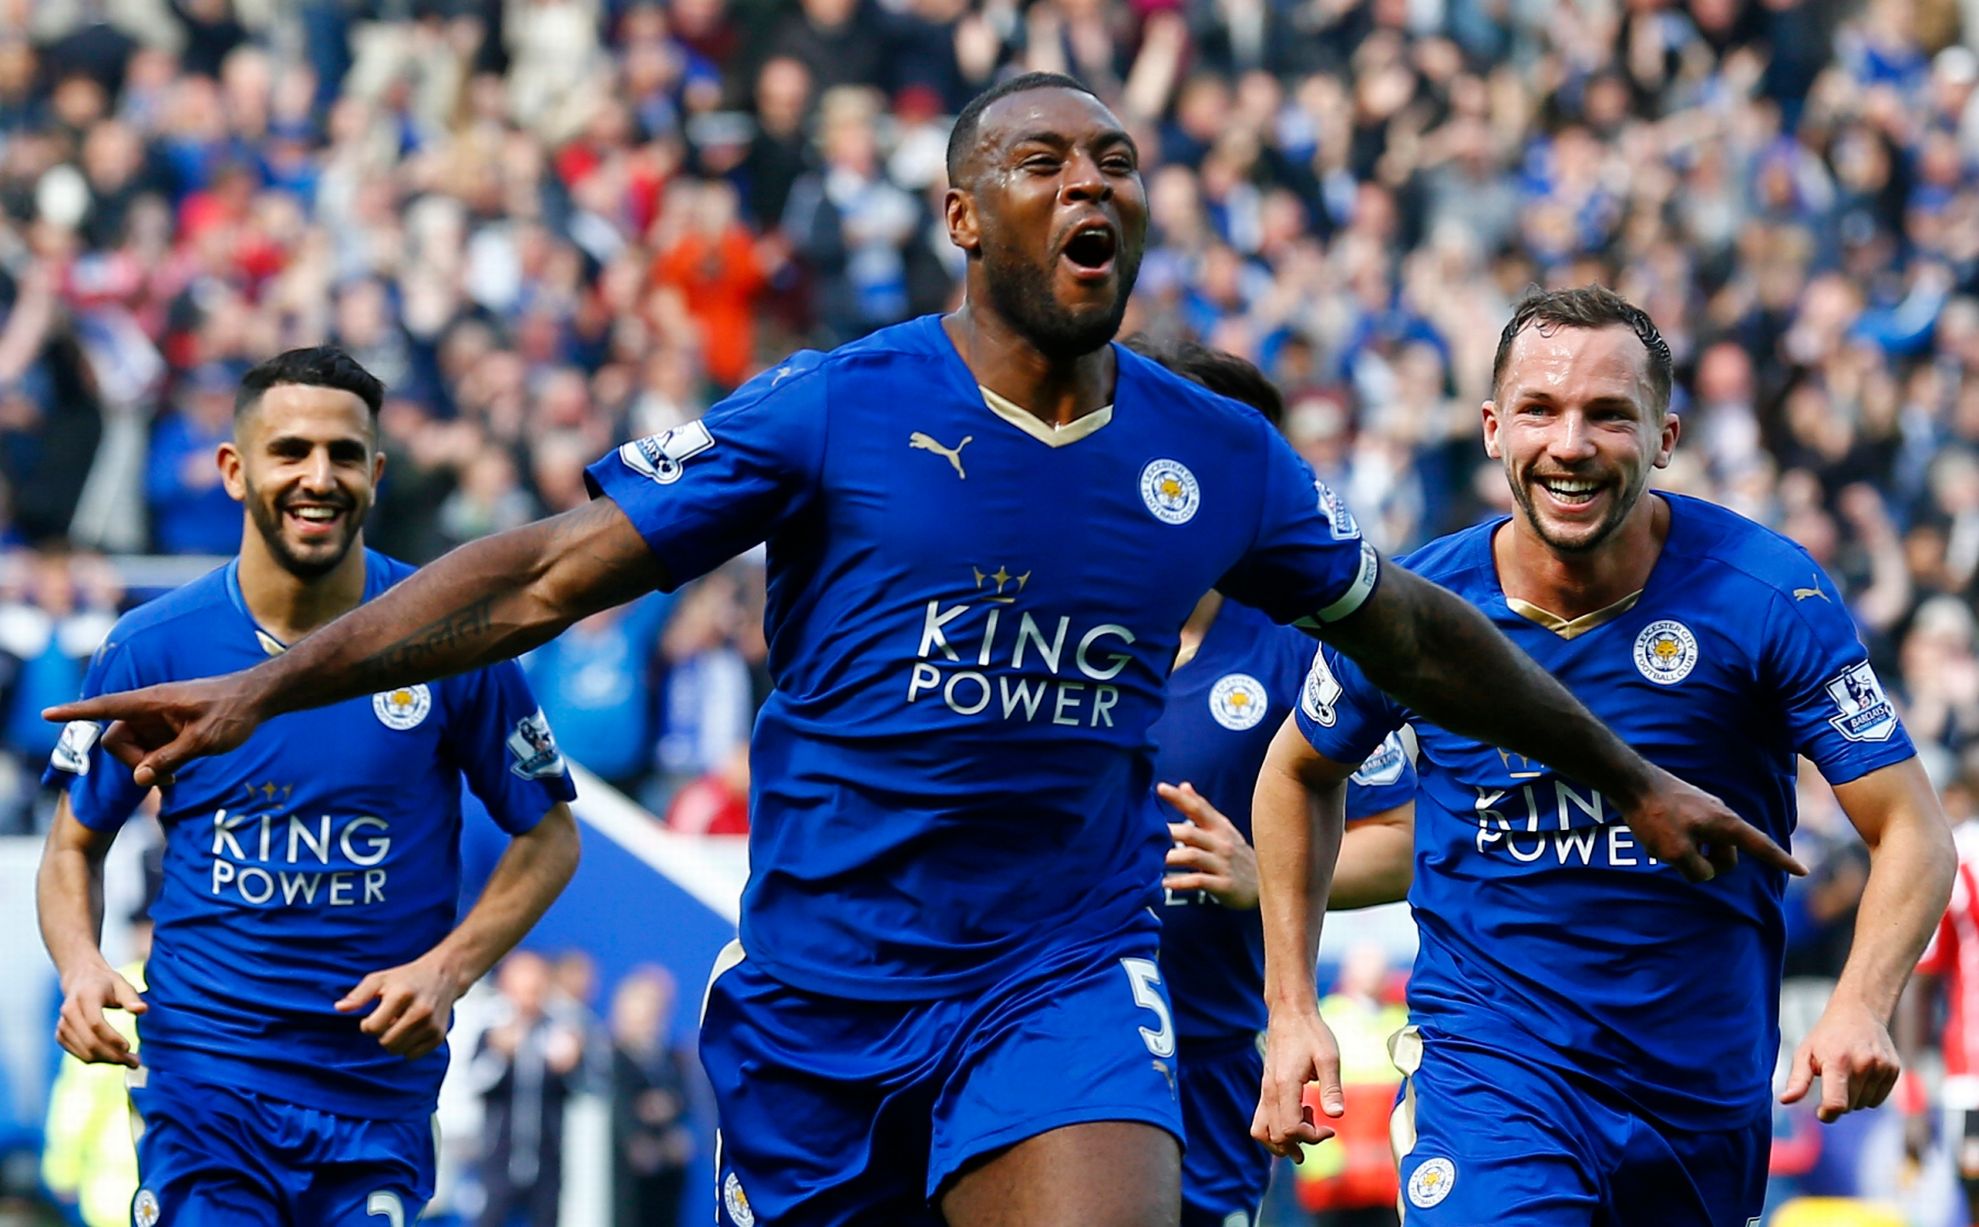 Leicester 1-0 Southampton: Captain Morgan sends Leicester seven points clear